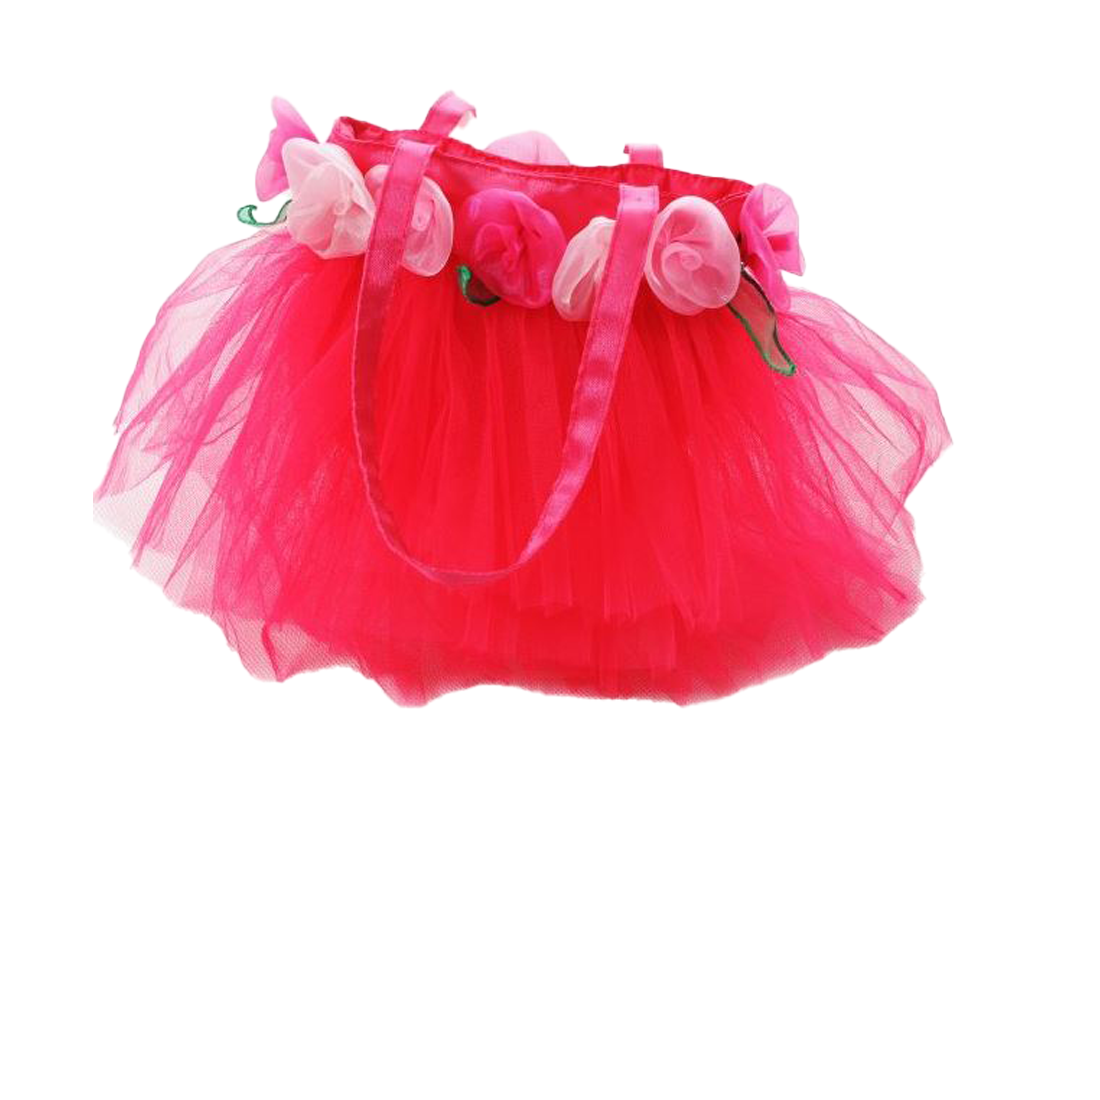 Fairy Tutu Tulle Girls Handbag Hot Pink